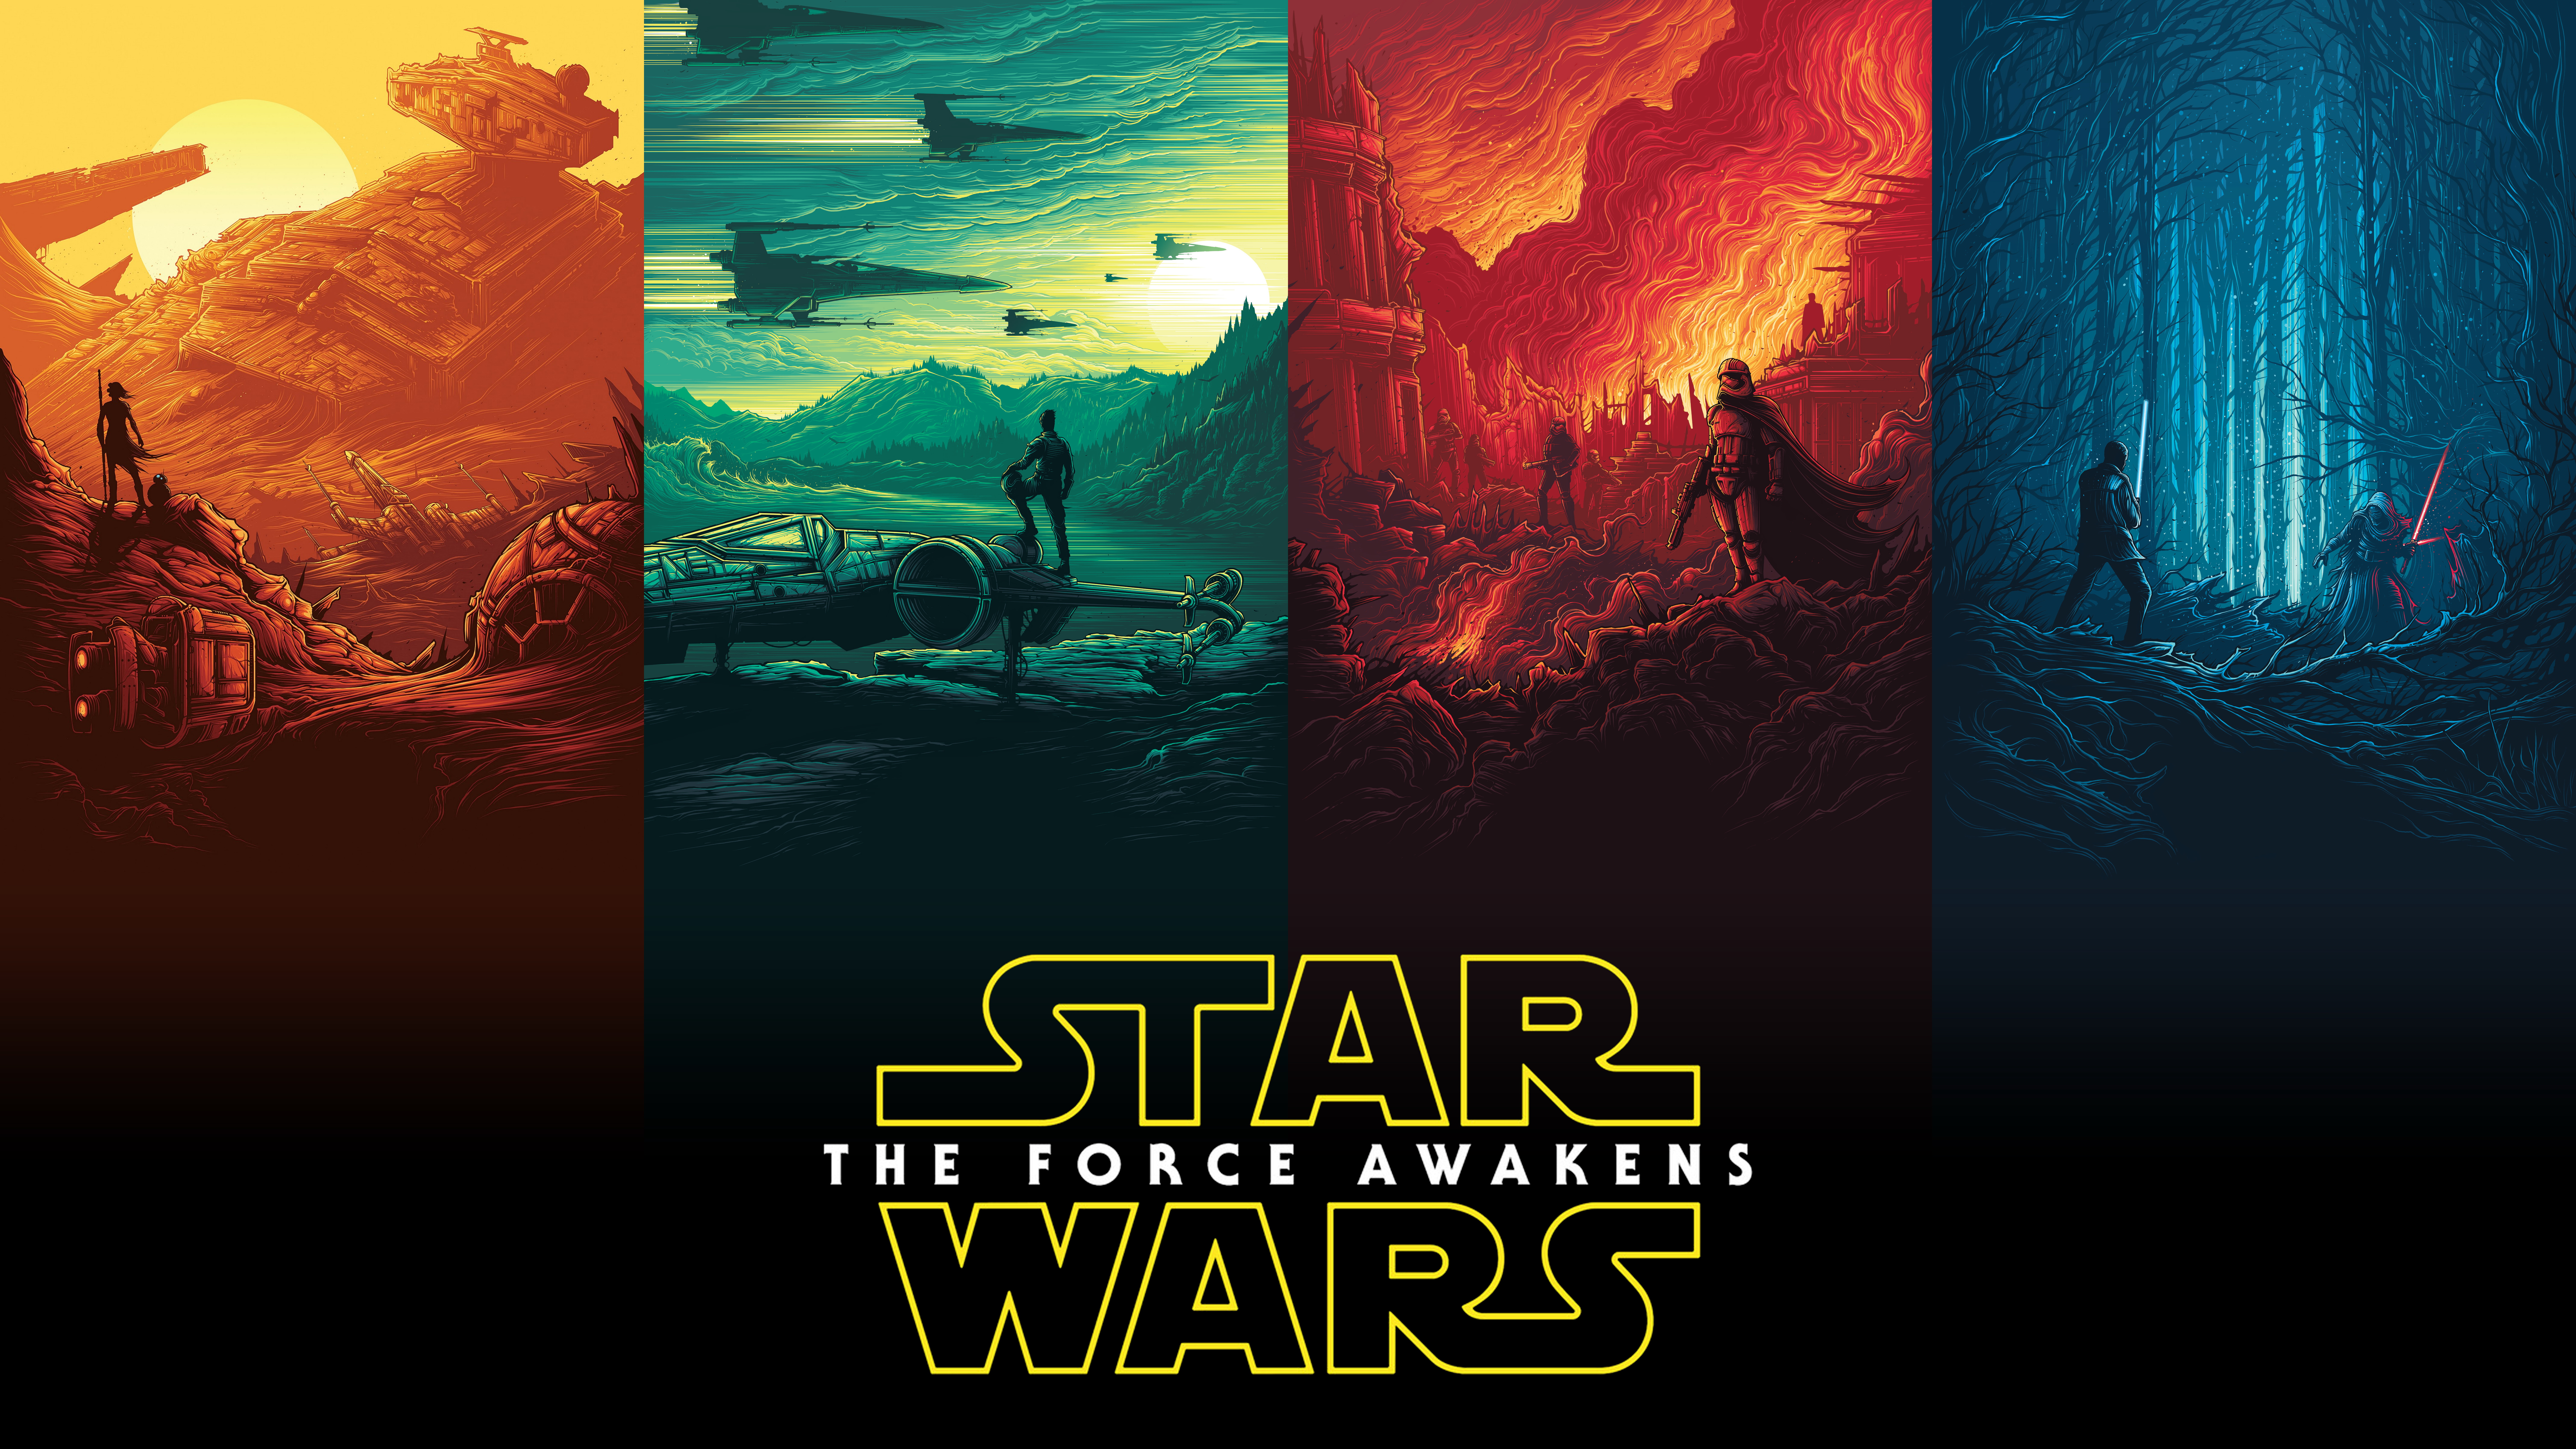 Star Wars Episode VII: The Force Awakens 8k Ultra HD Wallpaper by Dan Mumford